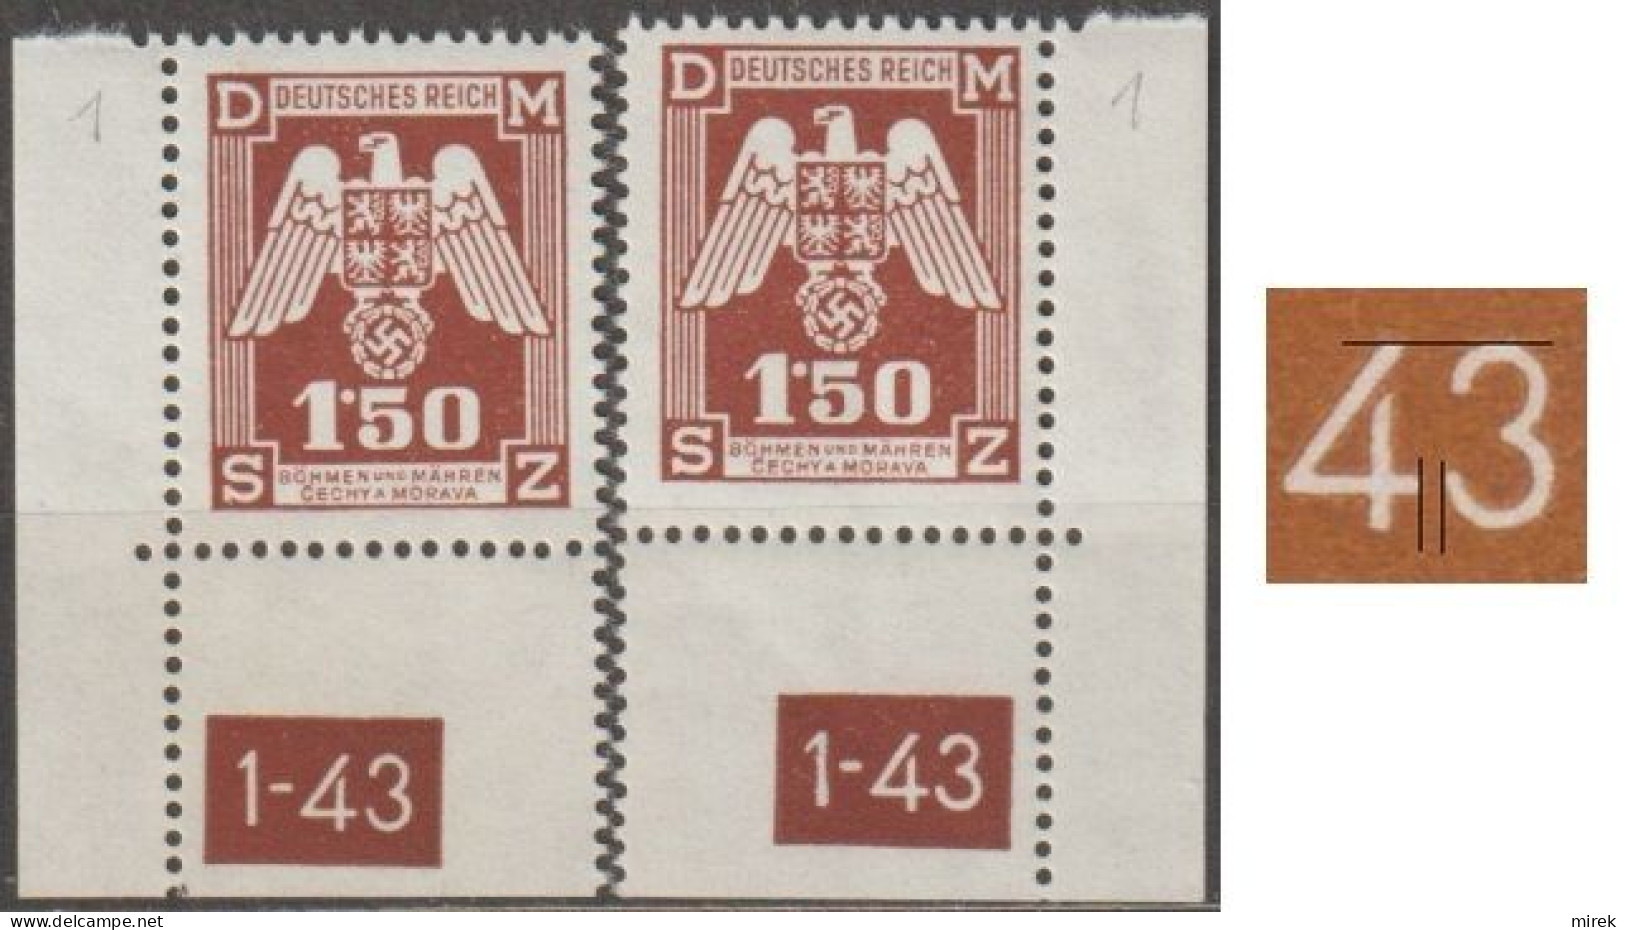 023/ Pof. SL 20, Corner Stamps, Plate Number 1-43, Type 1, Var. 1 - Unused Stamps